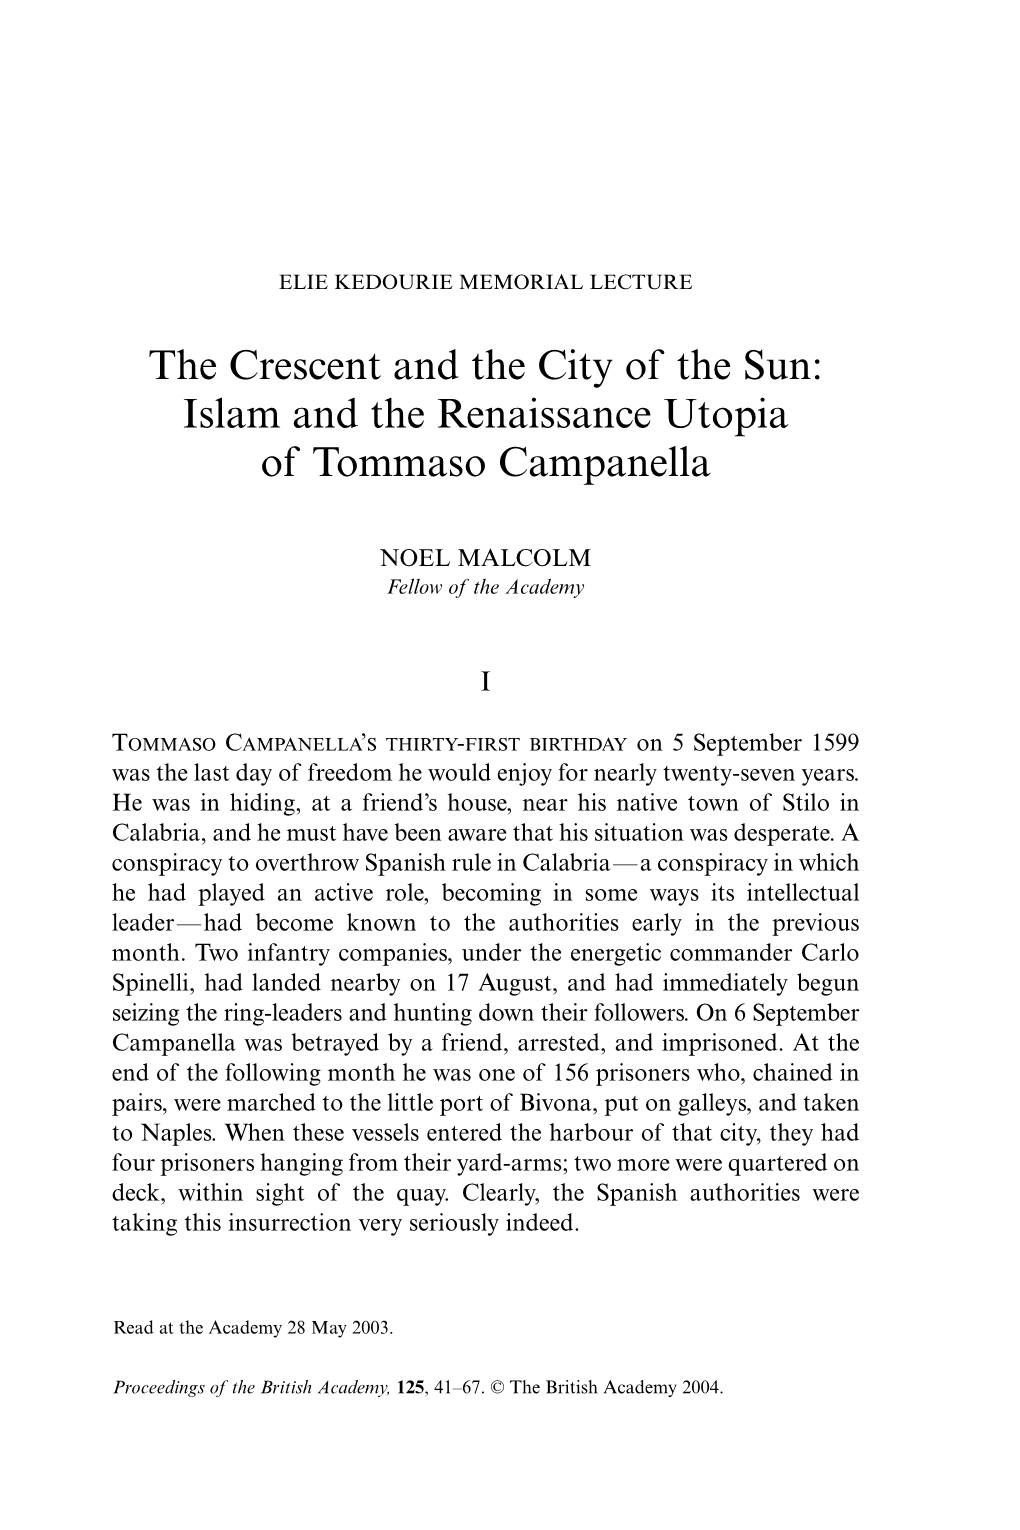 The Crescent and the City of the Sun: Islam and the Renaissance Utopia of Tommaso Campanella